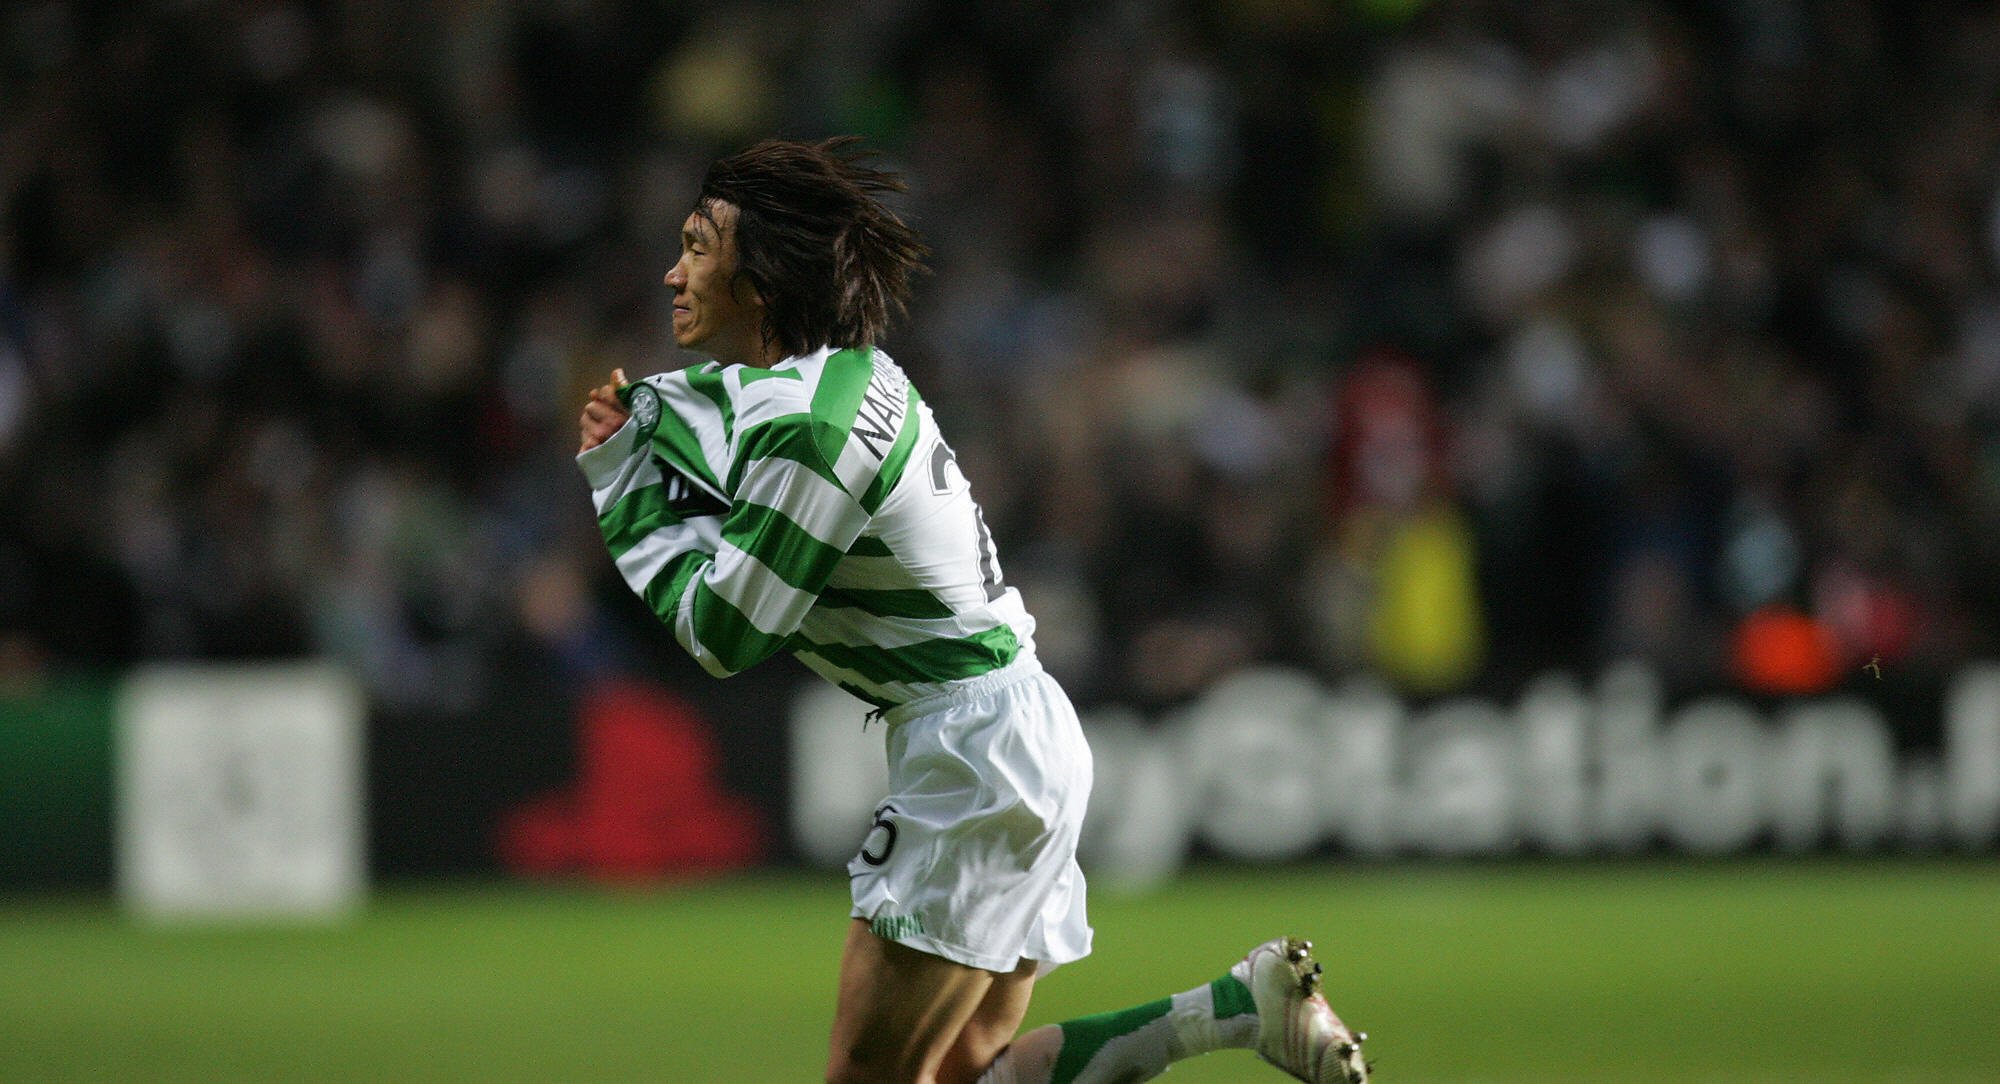 "He trusted me"; Celtic hero Shunsuke Nakamura on playing with freedom